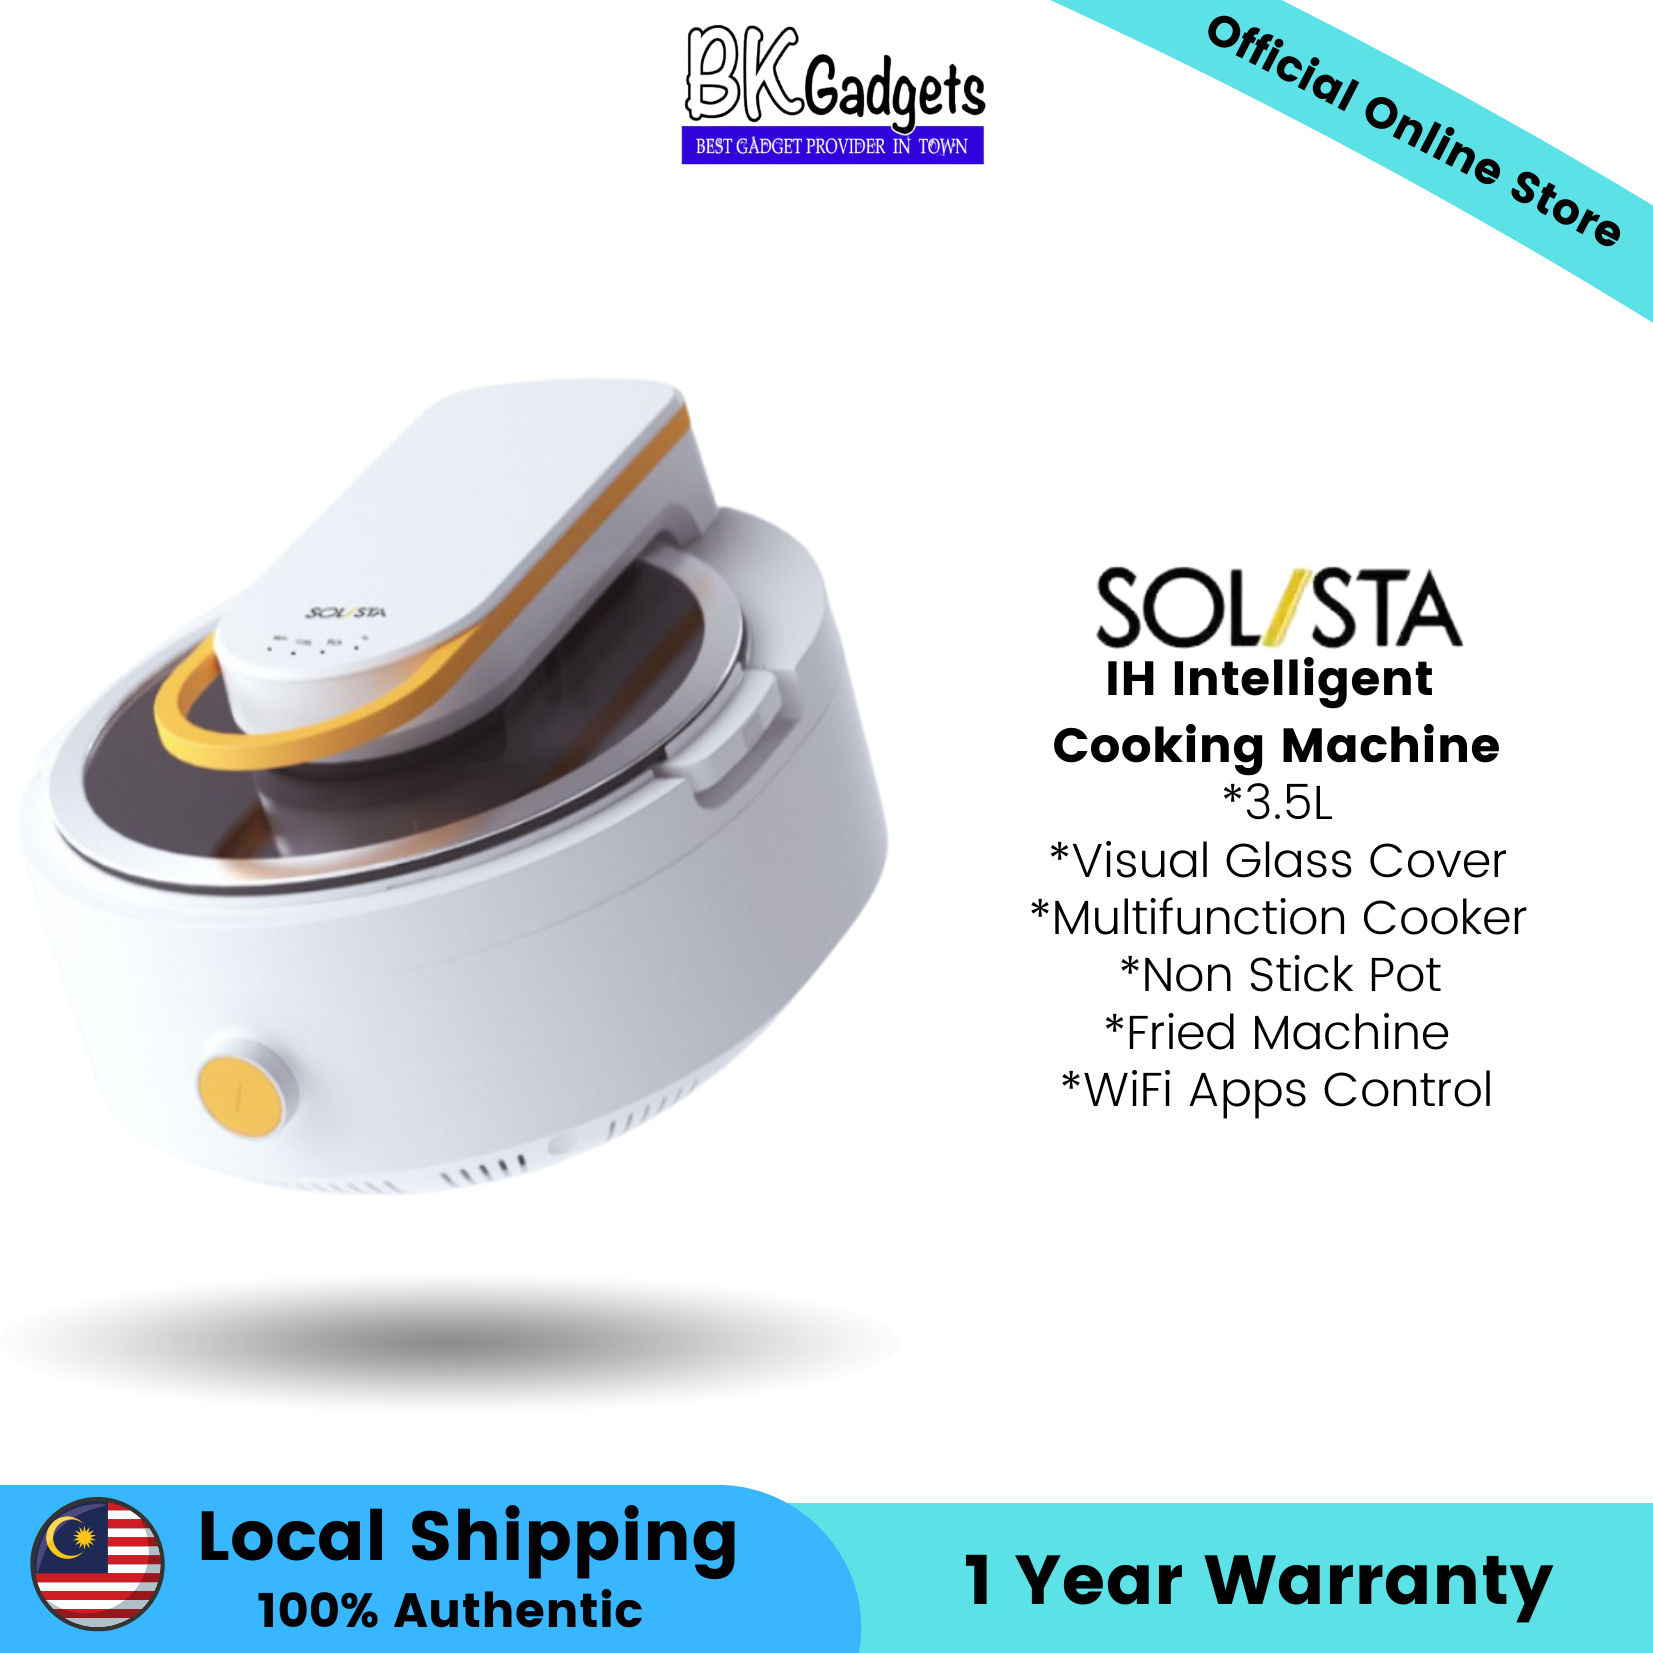 Solista IH Intelligent Cooking Machine CJ-A7 3.5L Capacity Multifunction Cooker Non Stick Pot